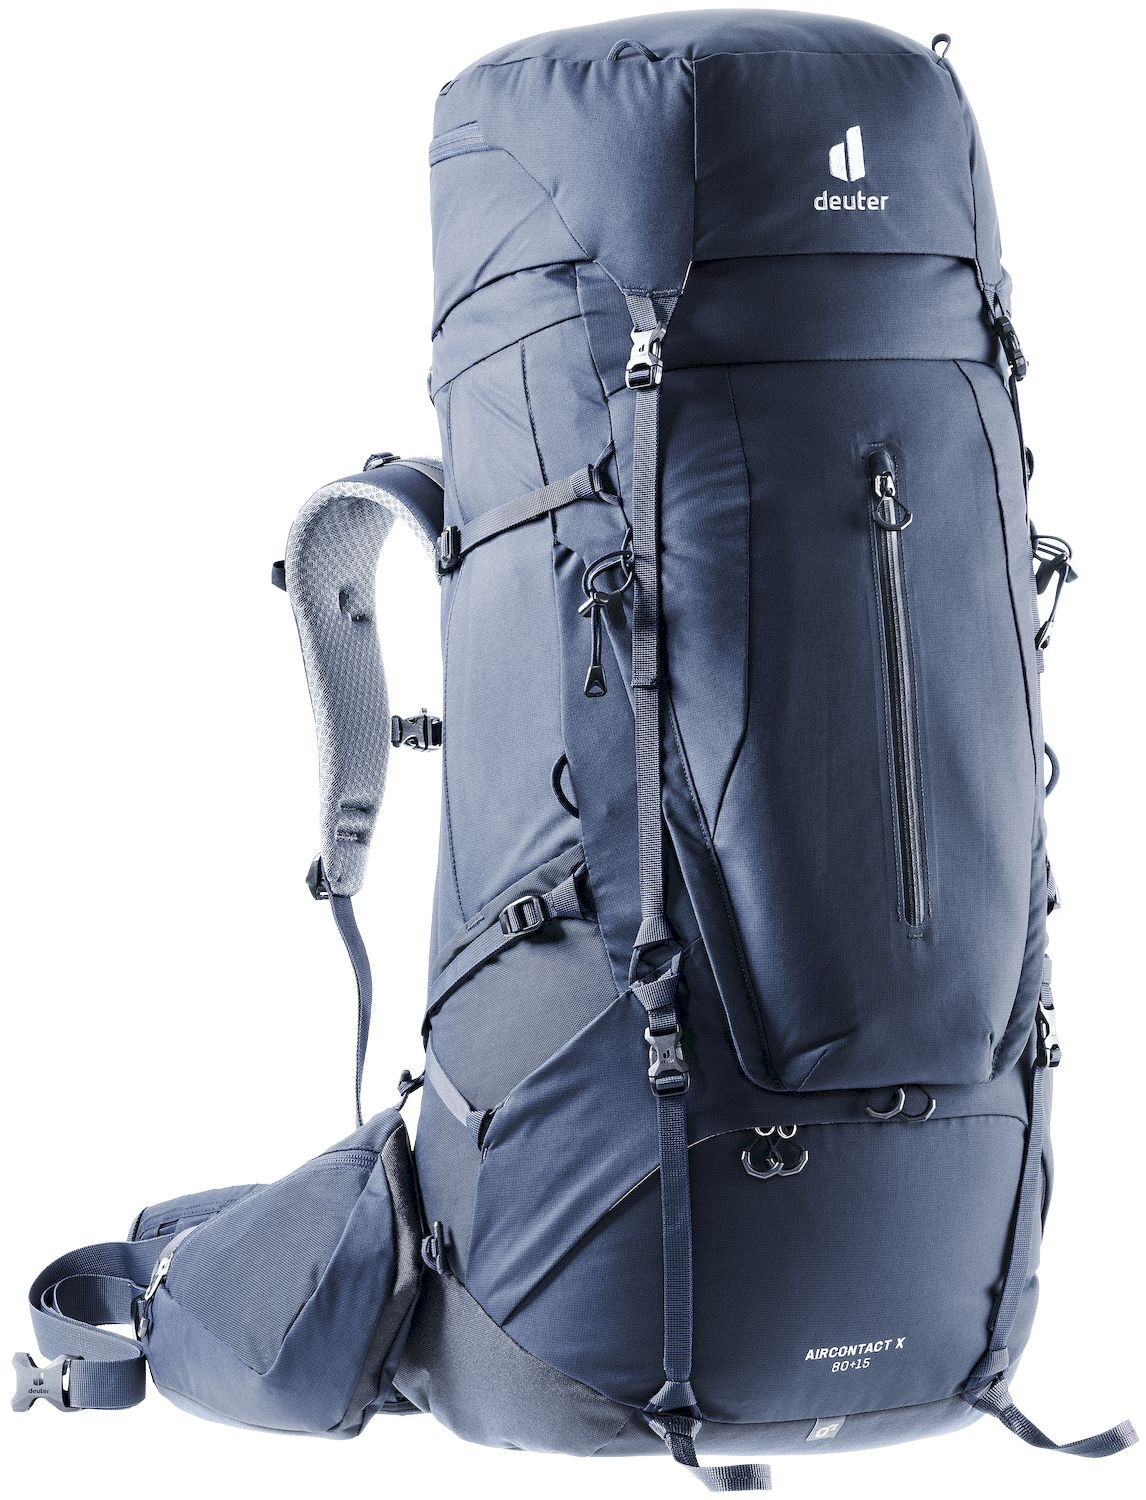 Deuter Aircontact X 80+15 - Hiking backpack - Men's